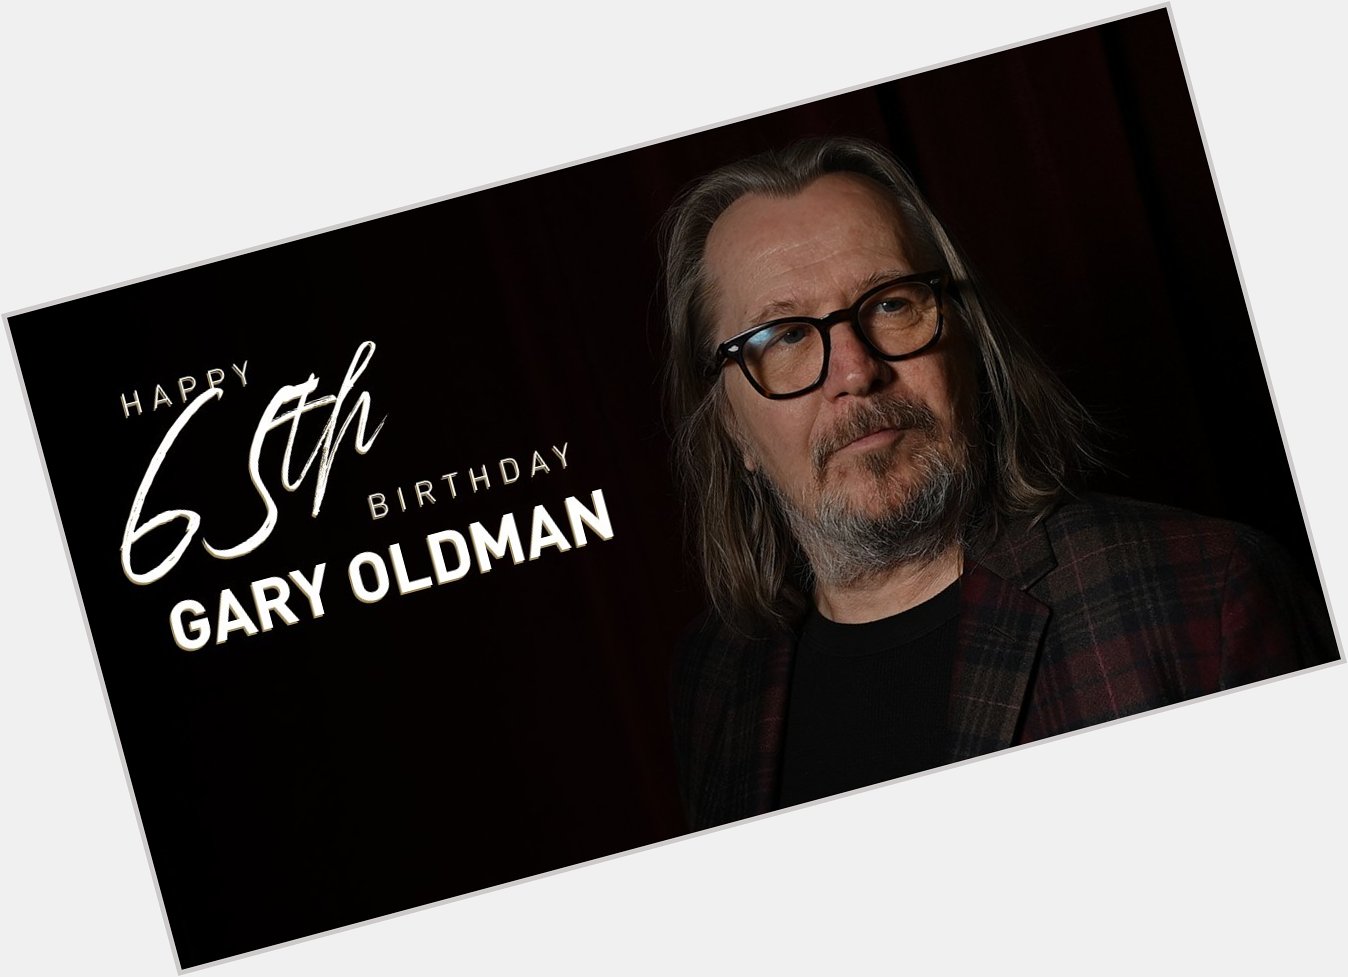 Happy 65th birthday Gary Oldman!

Read his bio here:  